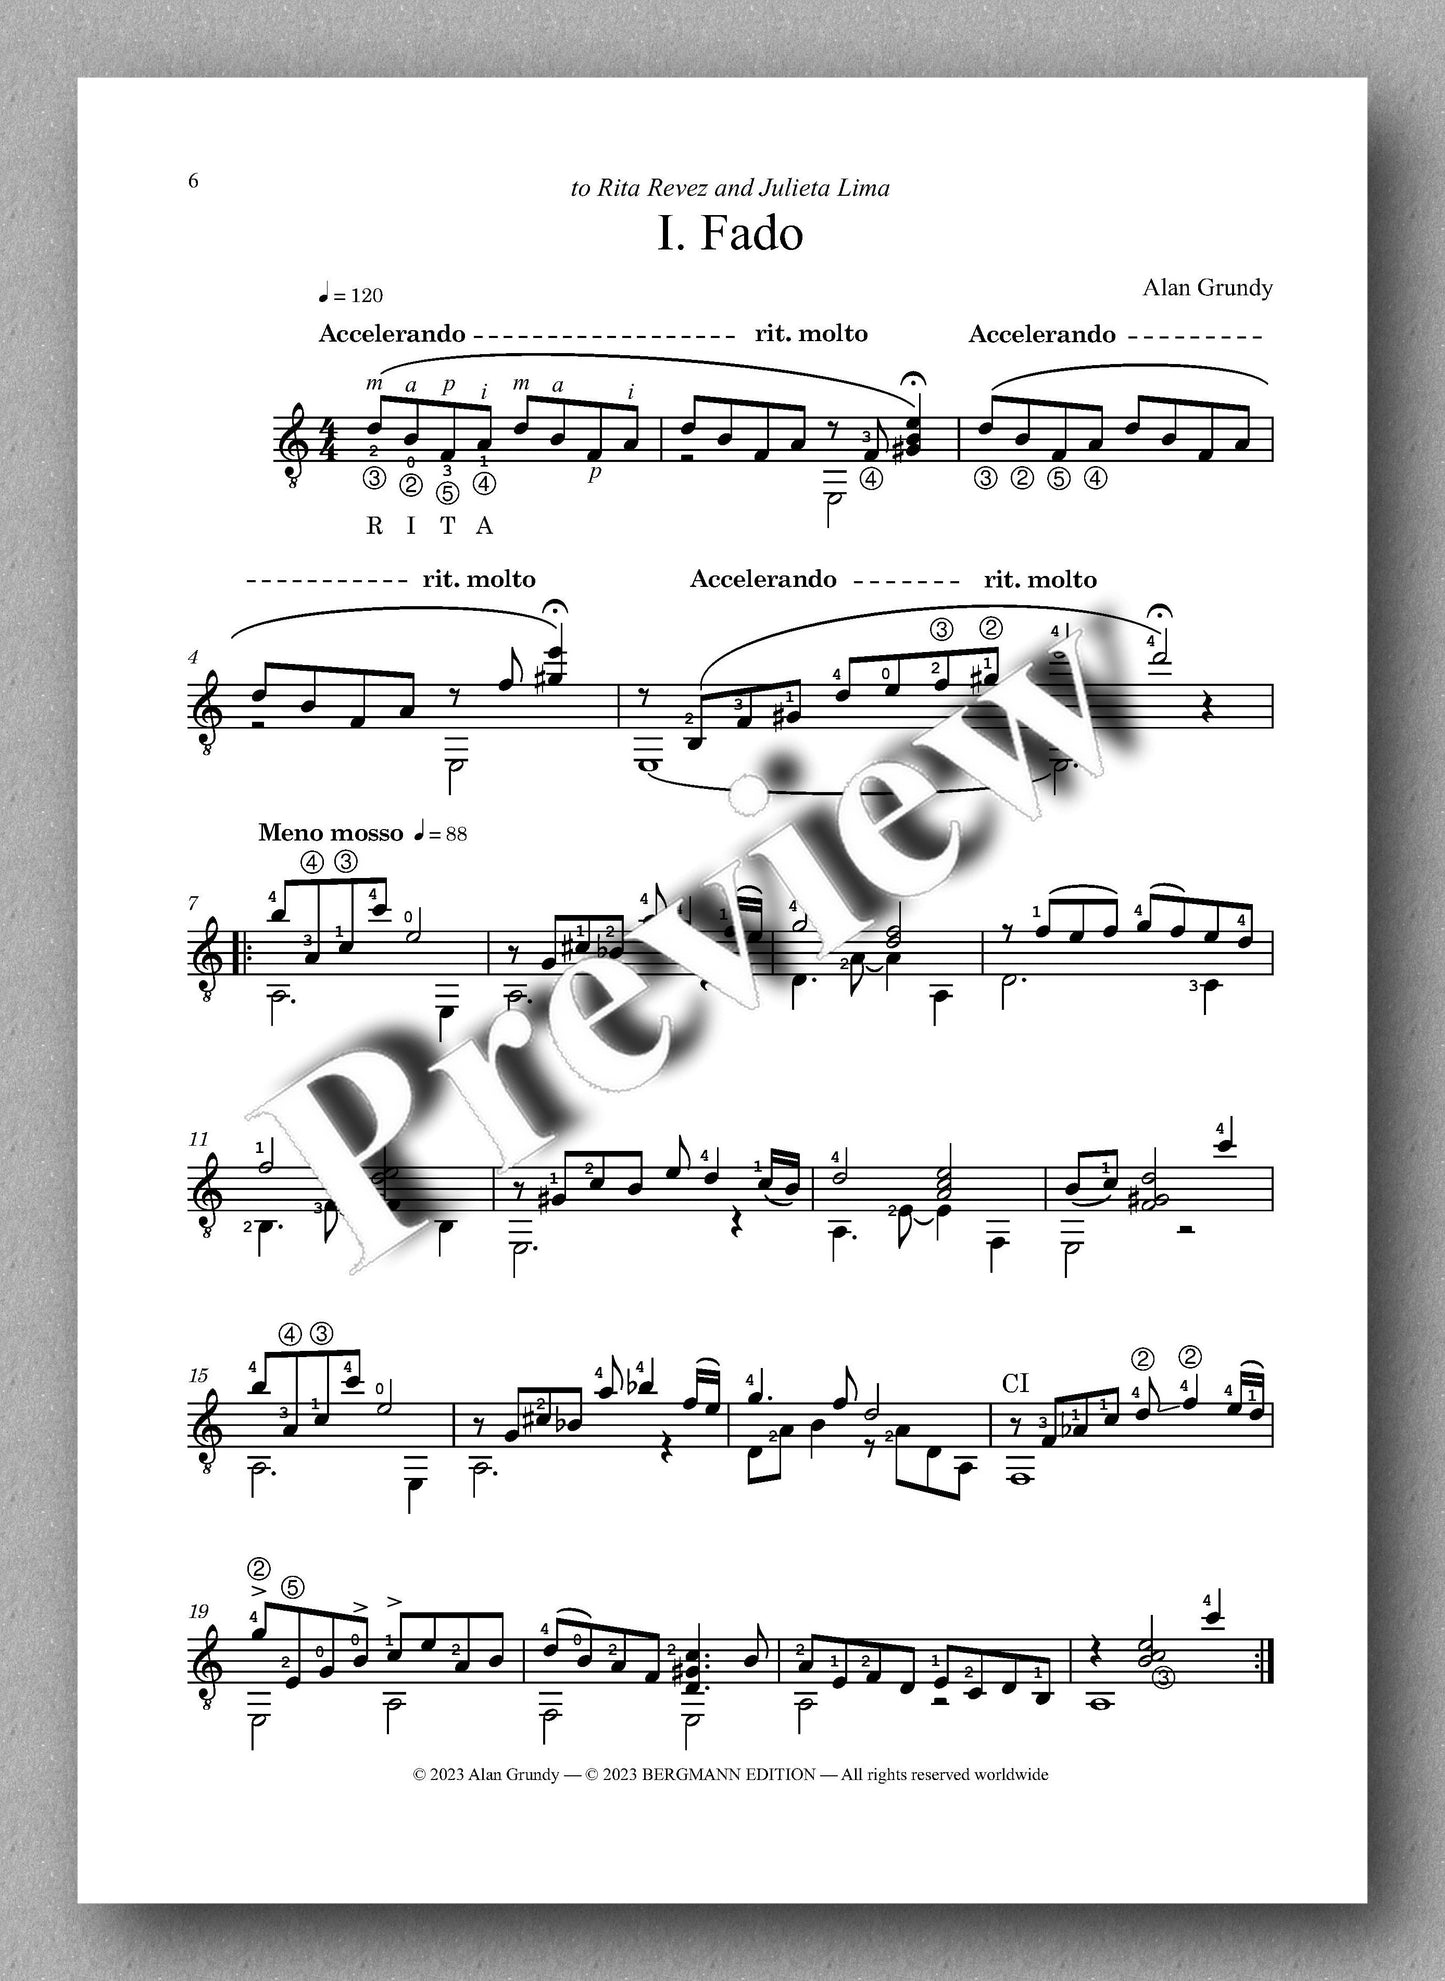 Dedicatória by Alan Grundy - preview of the music score 1